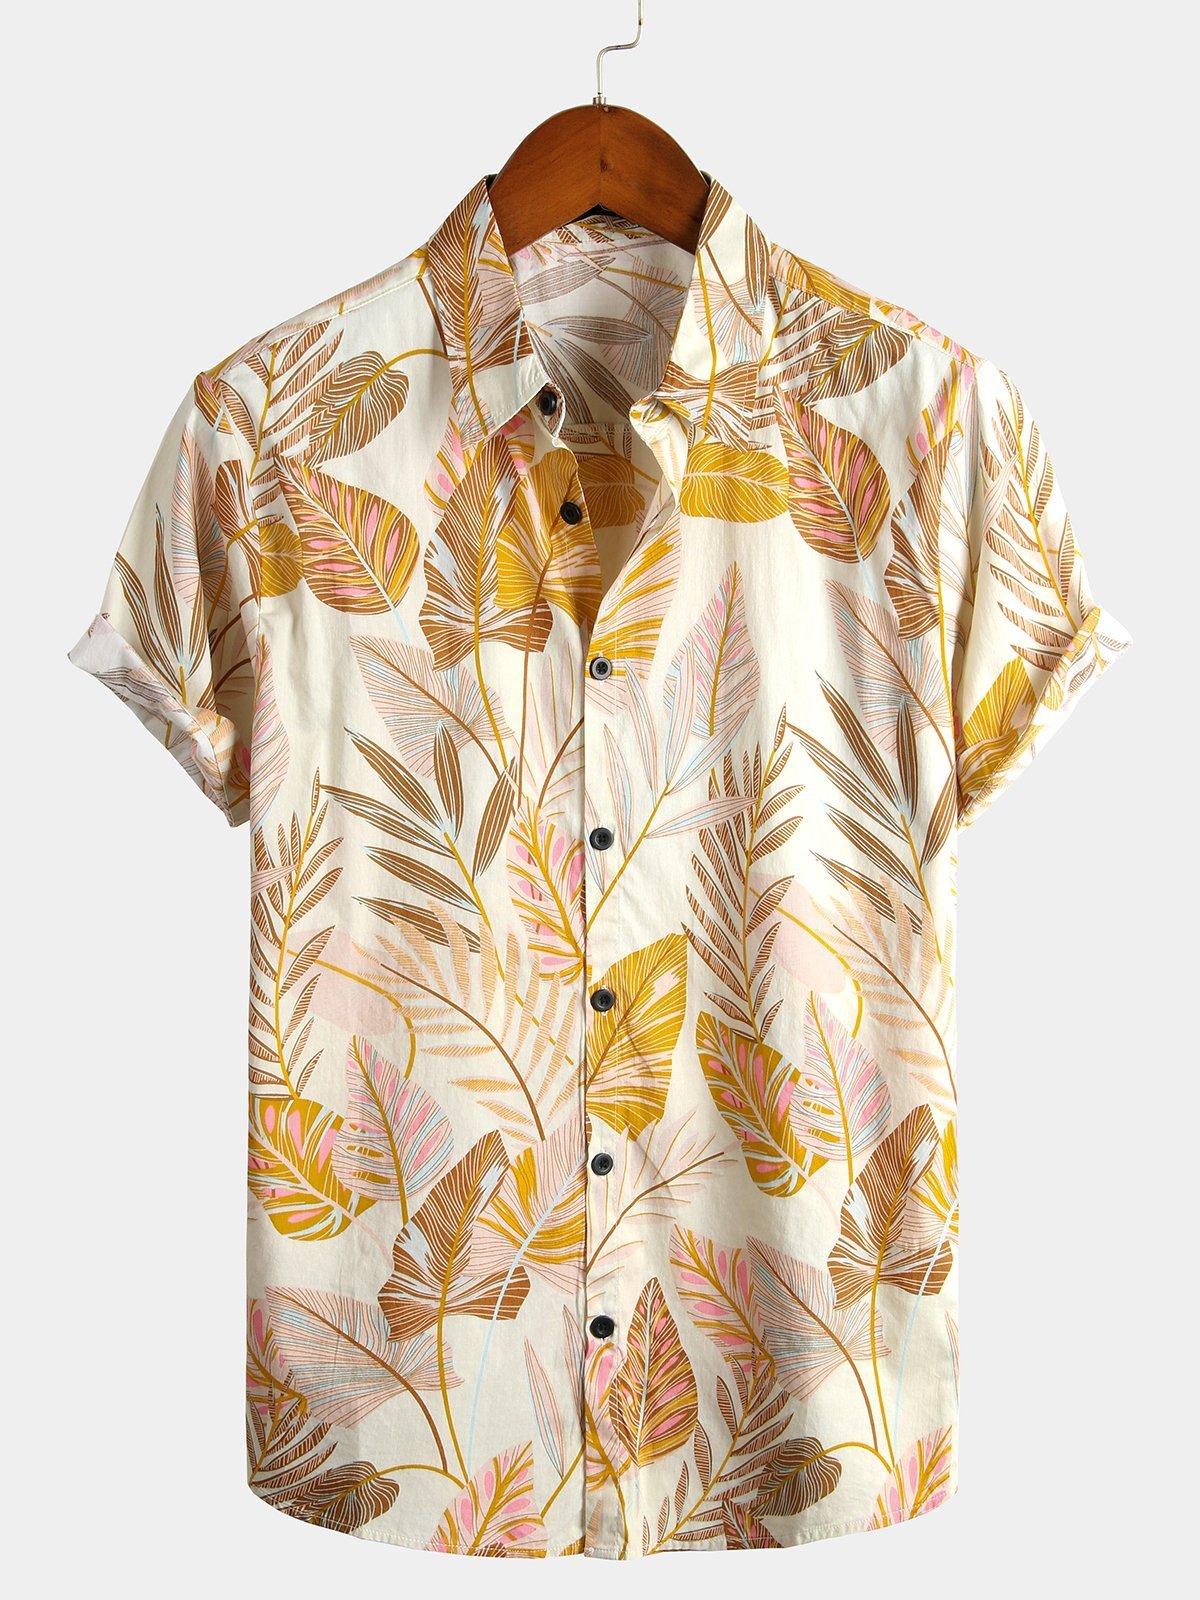 Men's Floral Print Cotton Casual & Breathable Tropical Hawaiian Shirt